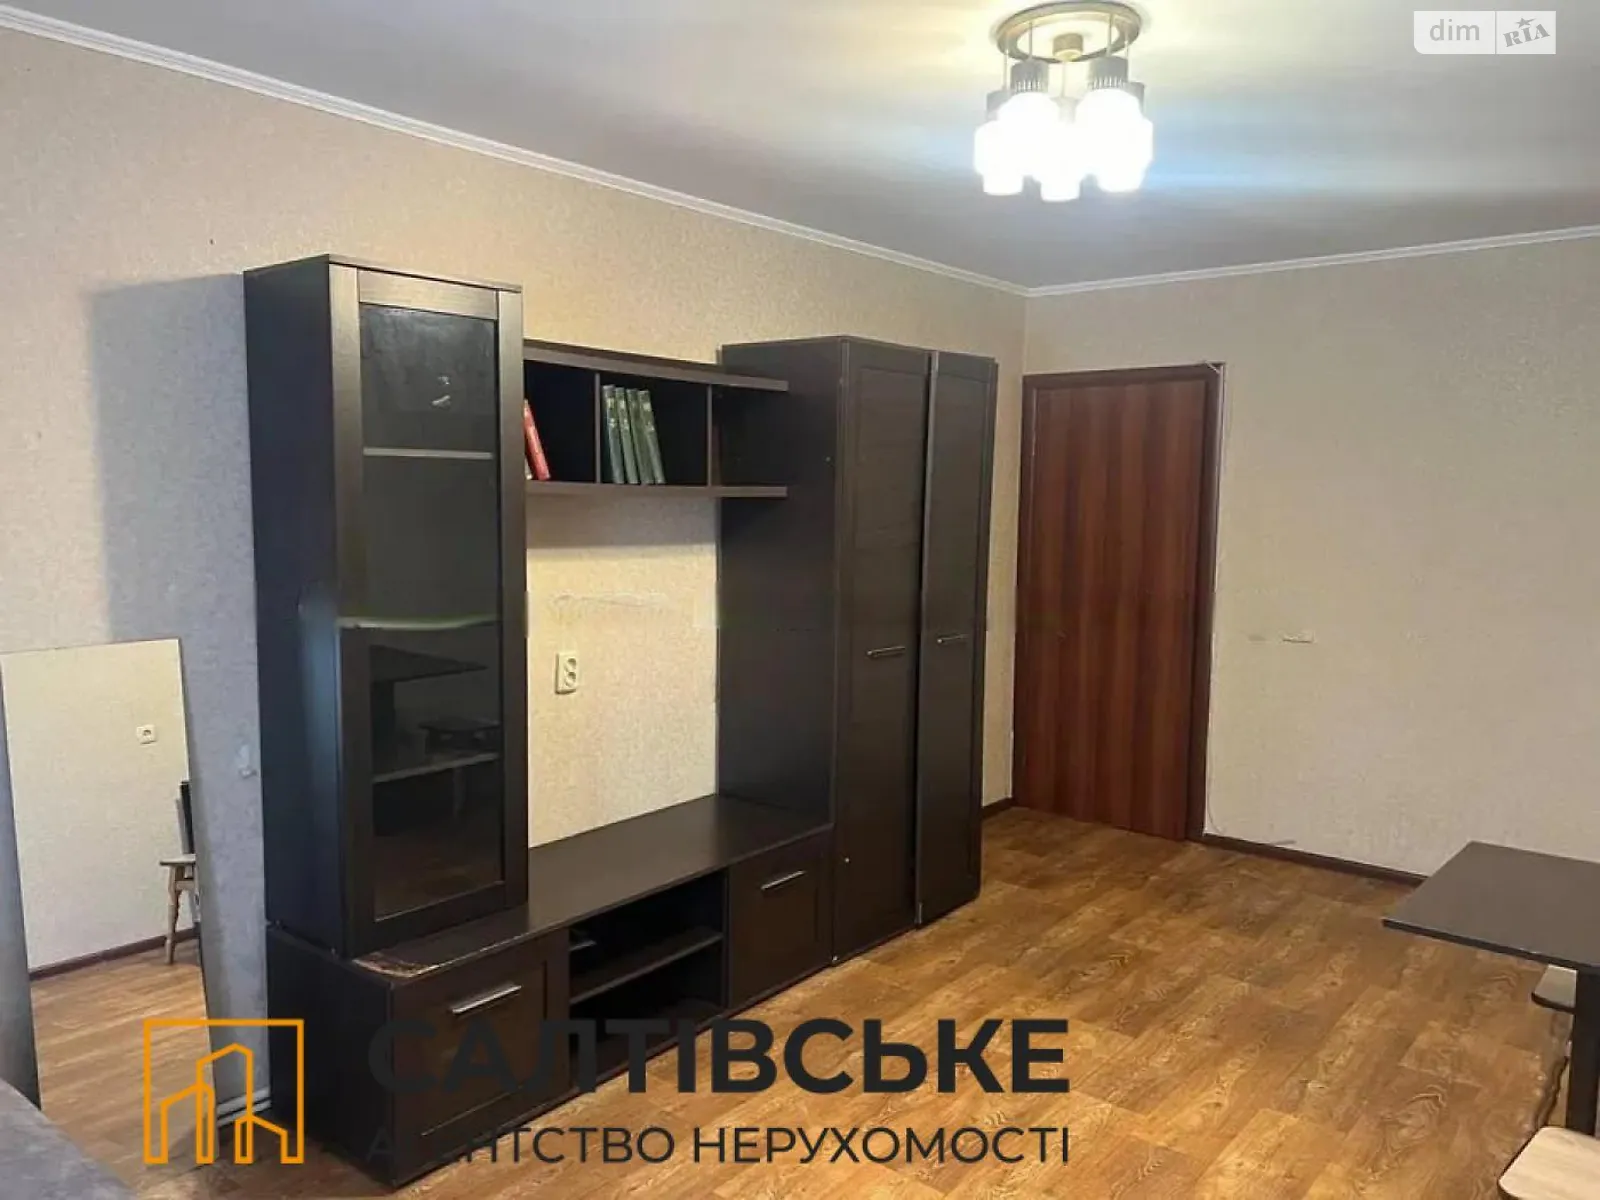 Продается комната 26 кв. м в Харькове - фото 2